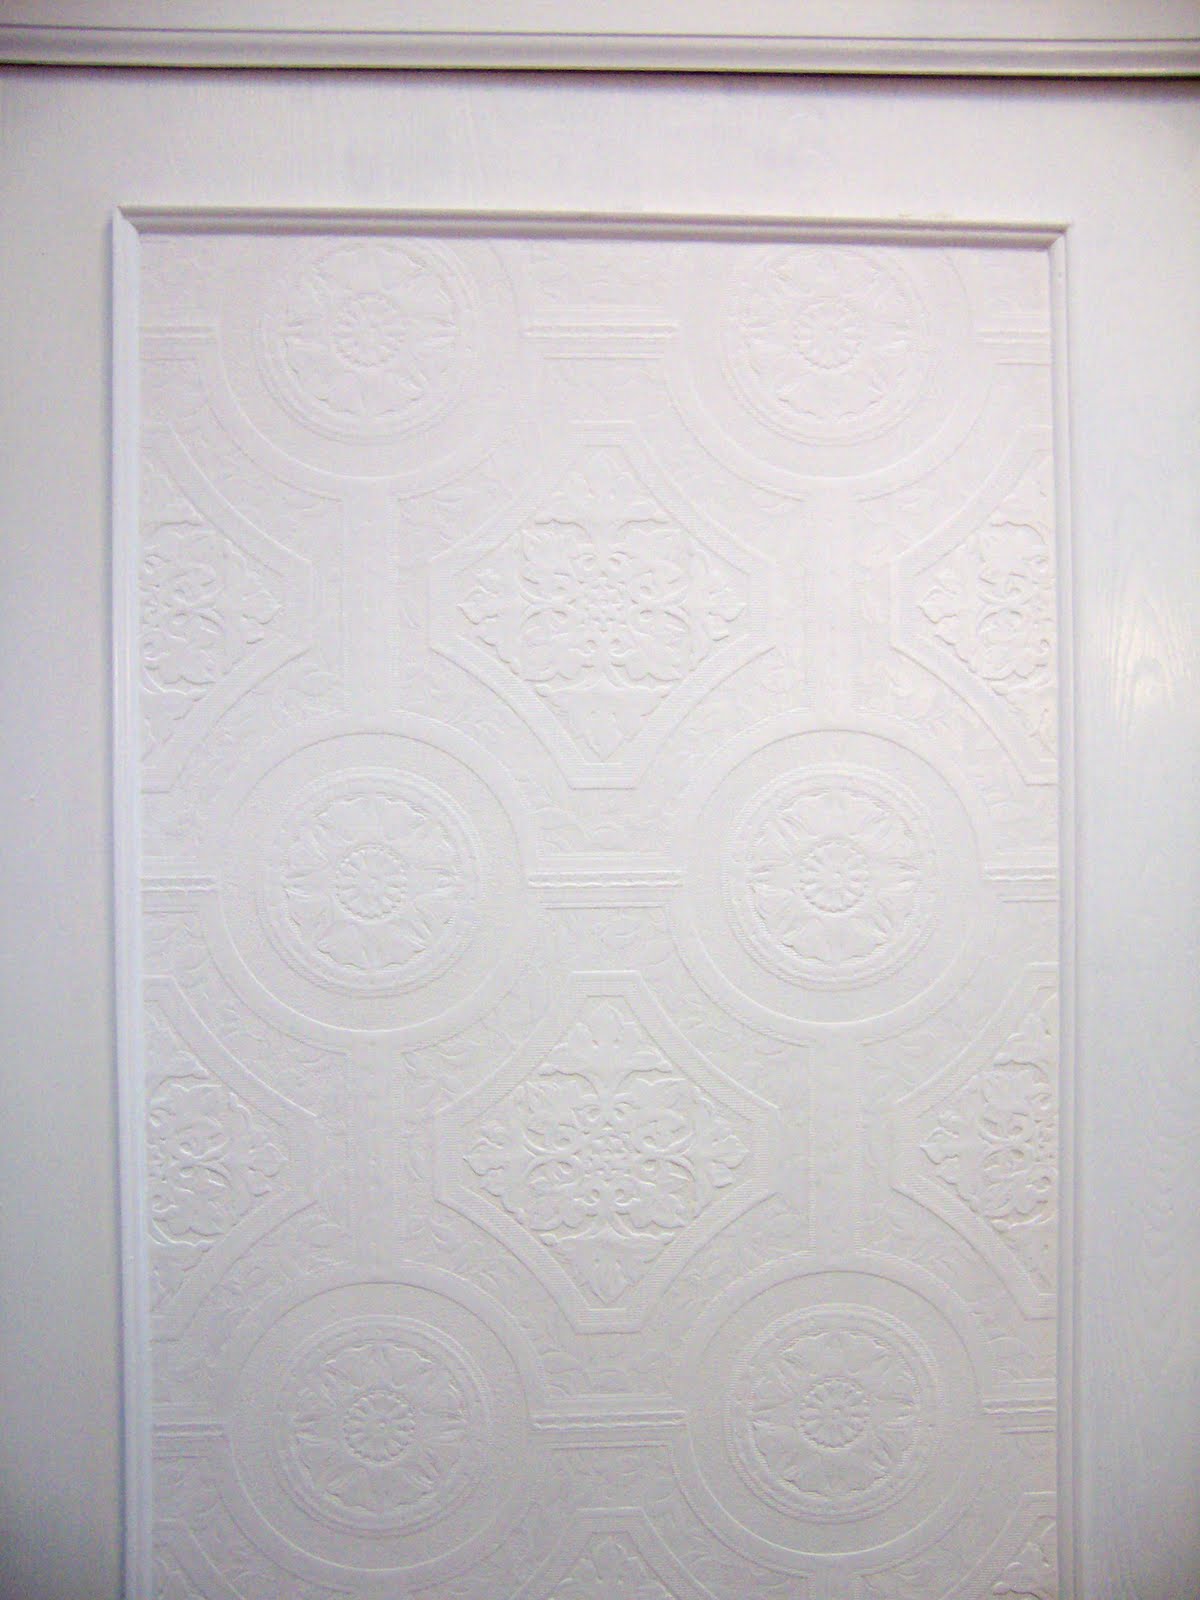 Update Flat Closet Doors With Trim And Textured Wallpaper - Sliding Flat Closet Doors - HD Wallpaper 